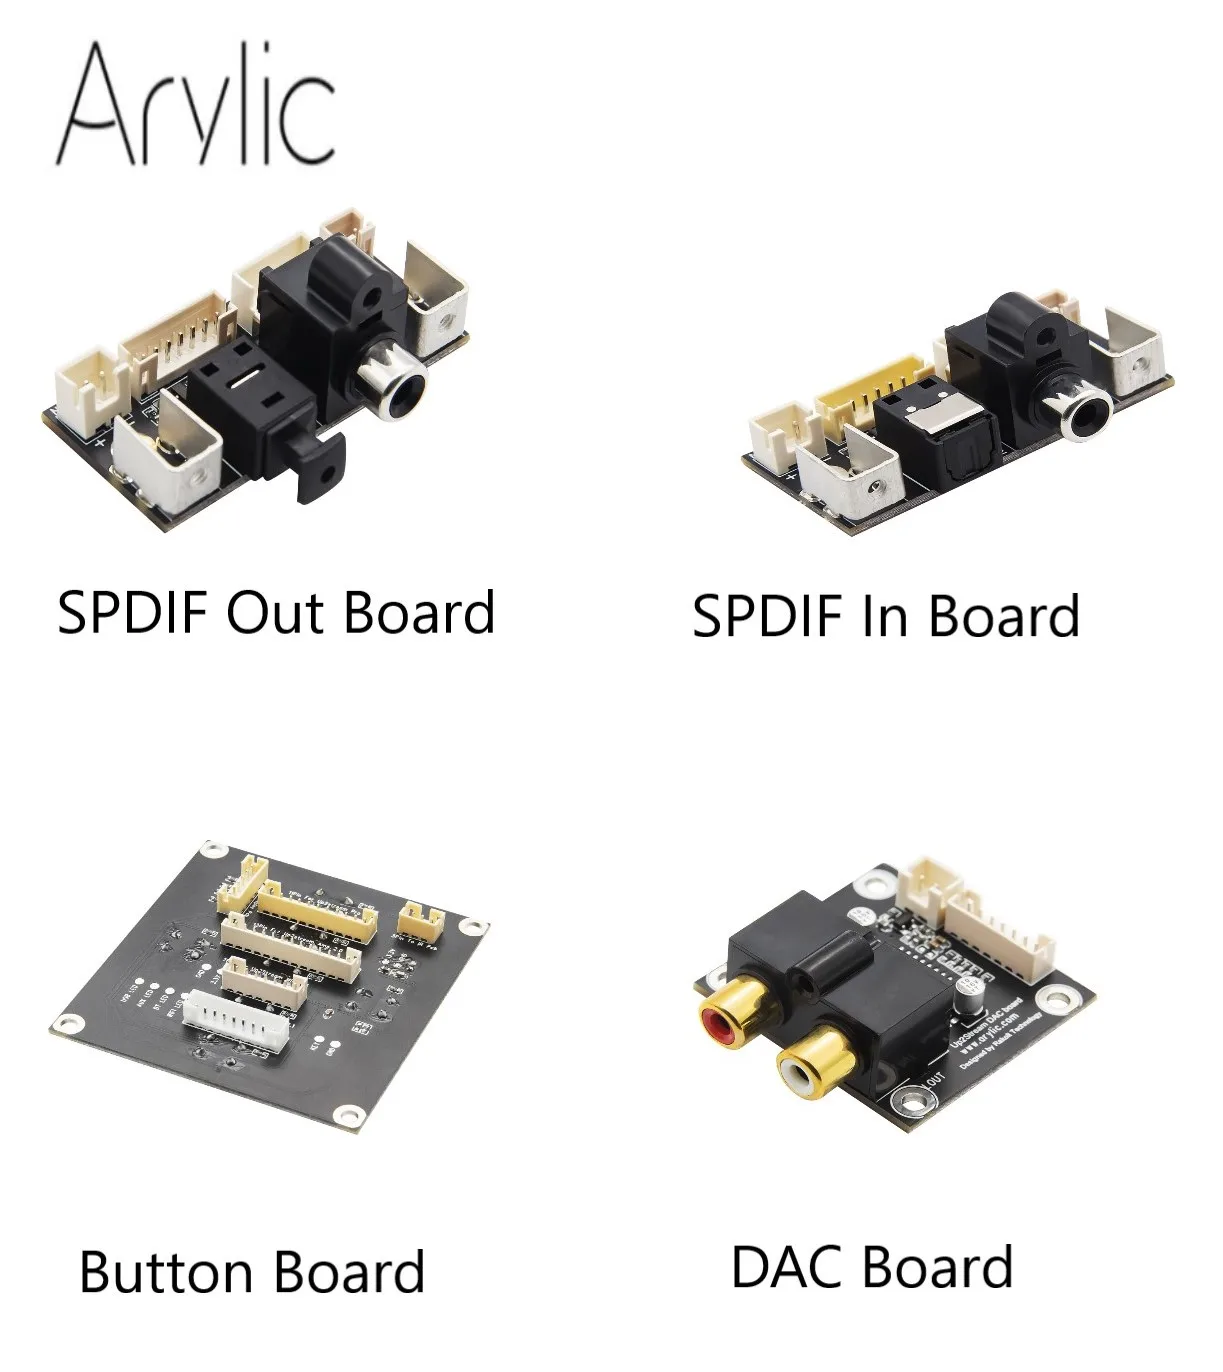 Arylic Expansion Boards Digital Interface Module DAC Board Optical input DAC decoder board 24bit 192K SPDIF In/Out